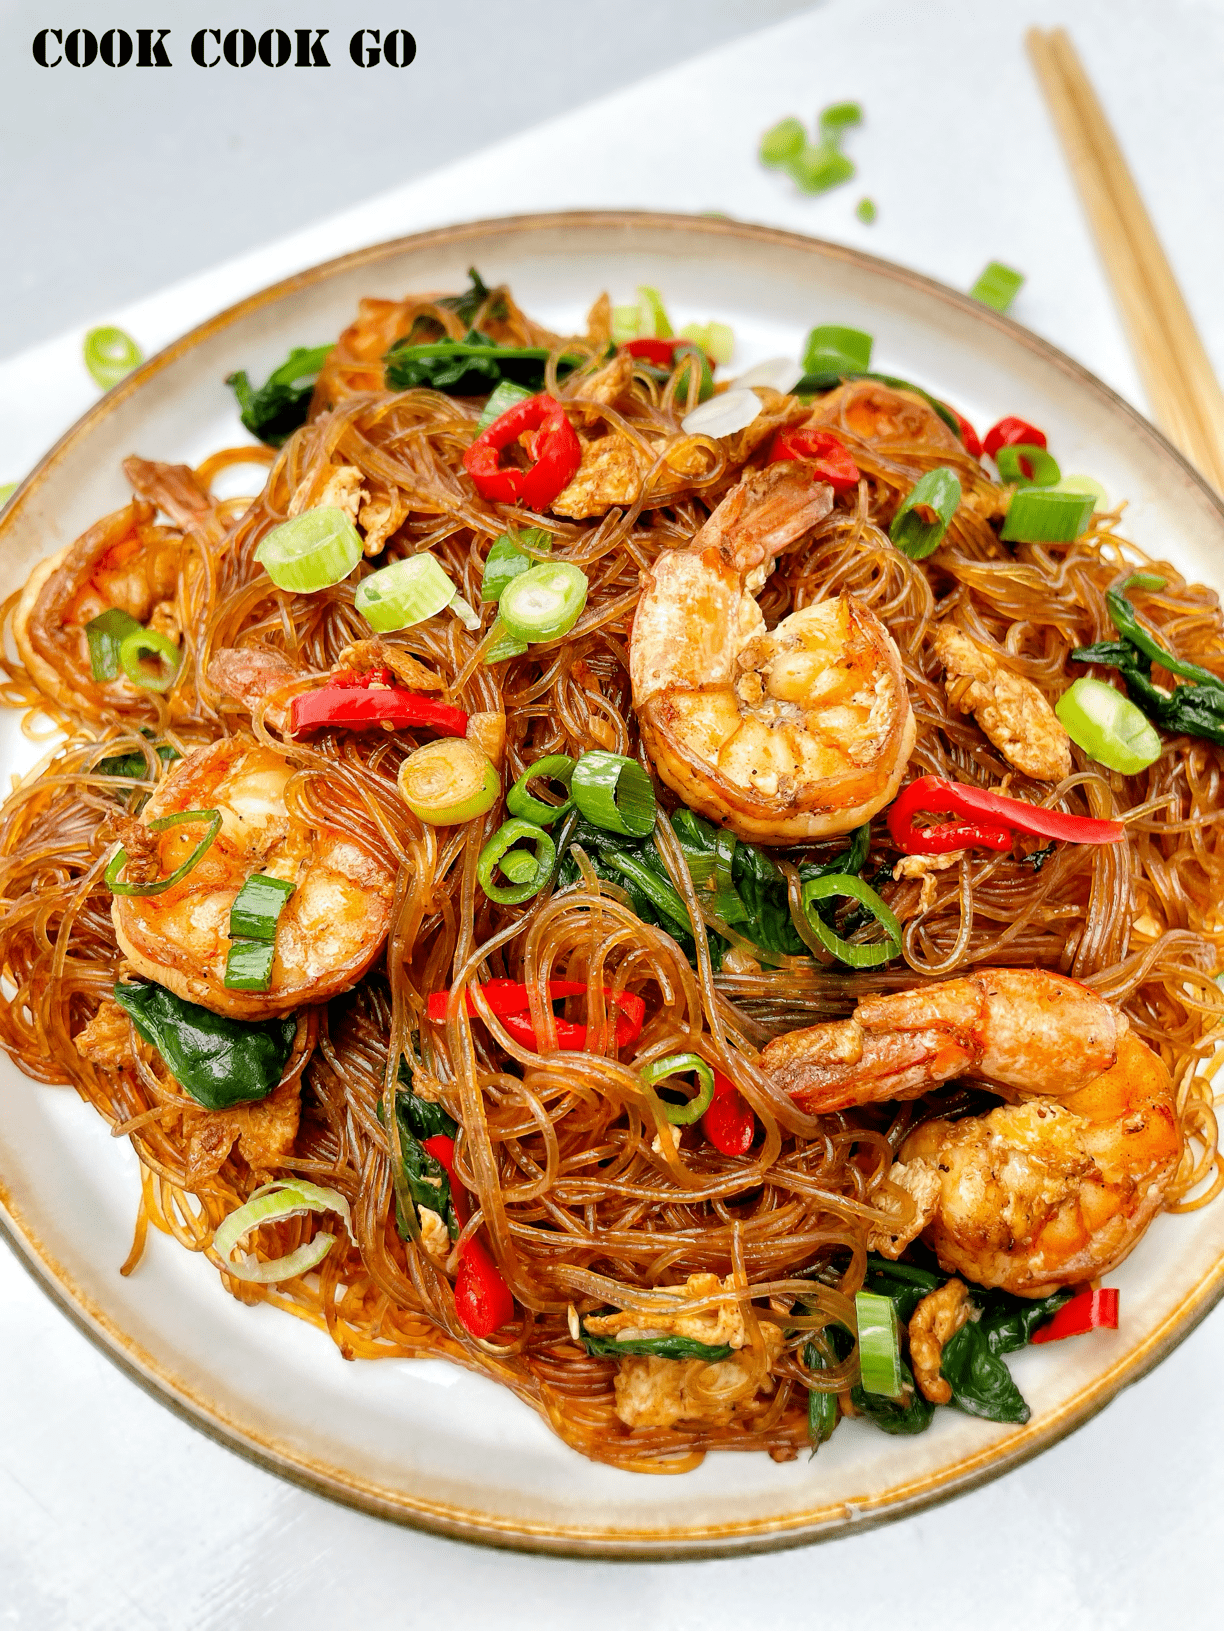 shrimp glass noodles stir fry with soy sauce